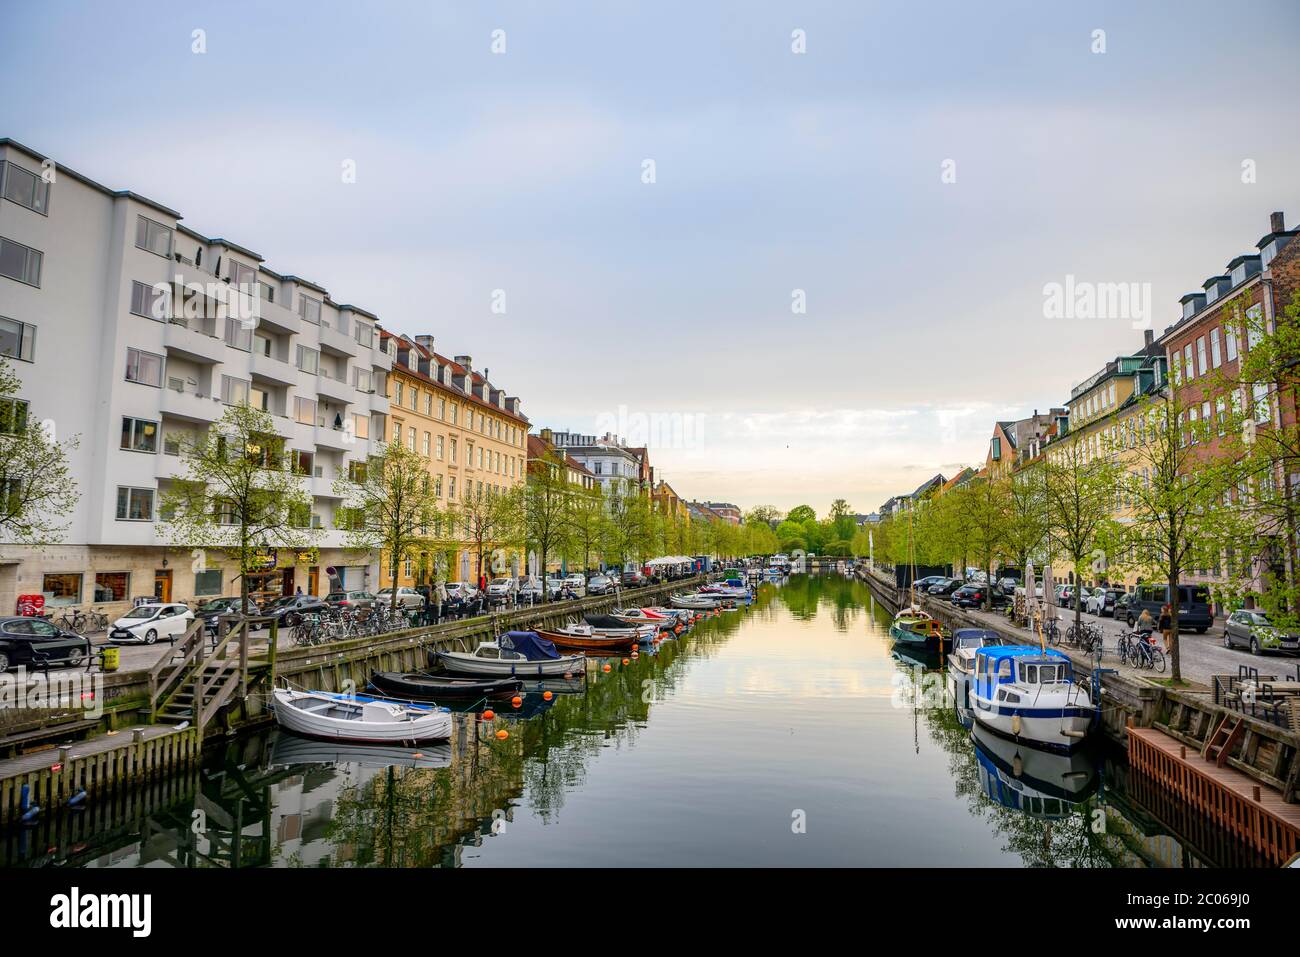 Houses on a canal with boats, Christianshavn, Copenhagen, Denmark Stock Photo